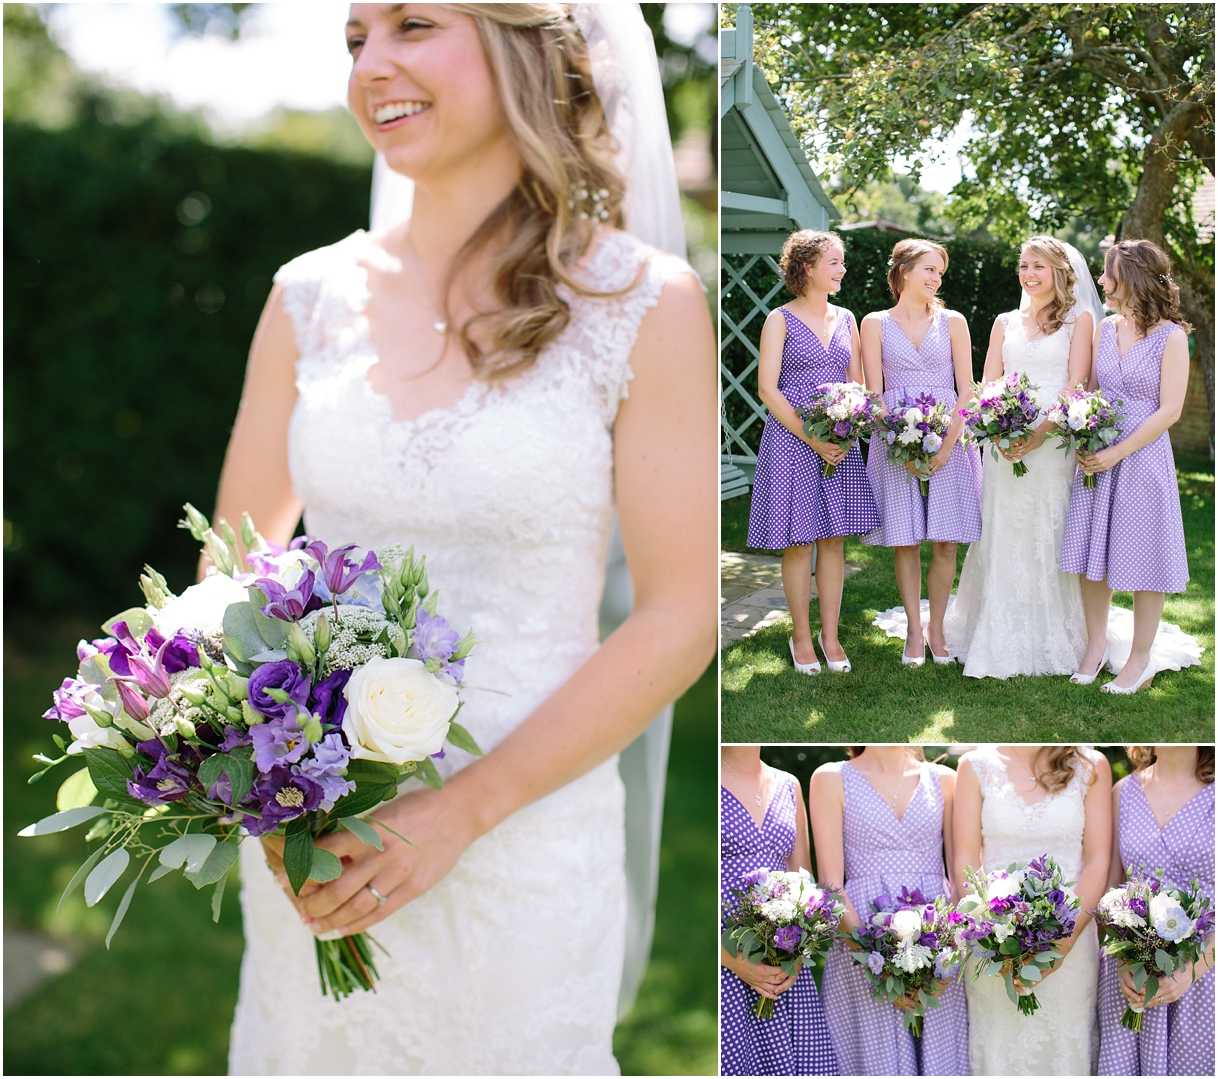 Bridesmaids-in-purple-polka-dots